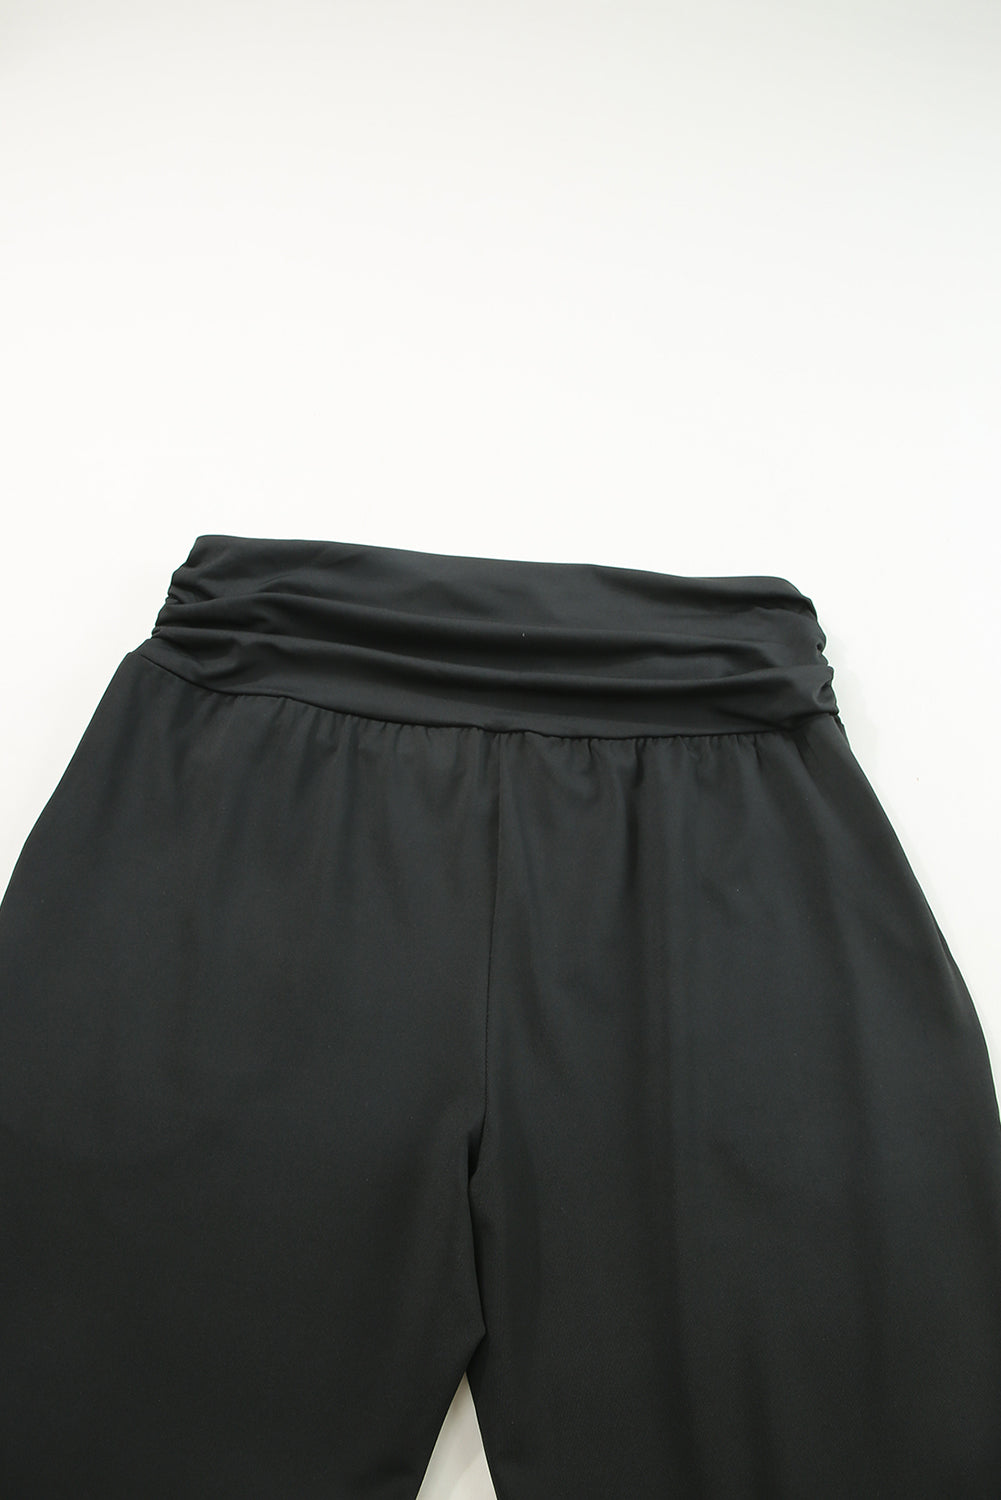 Black Plus Size High Waist Pocketed Skinny Pants - SELFTRITSS